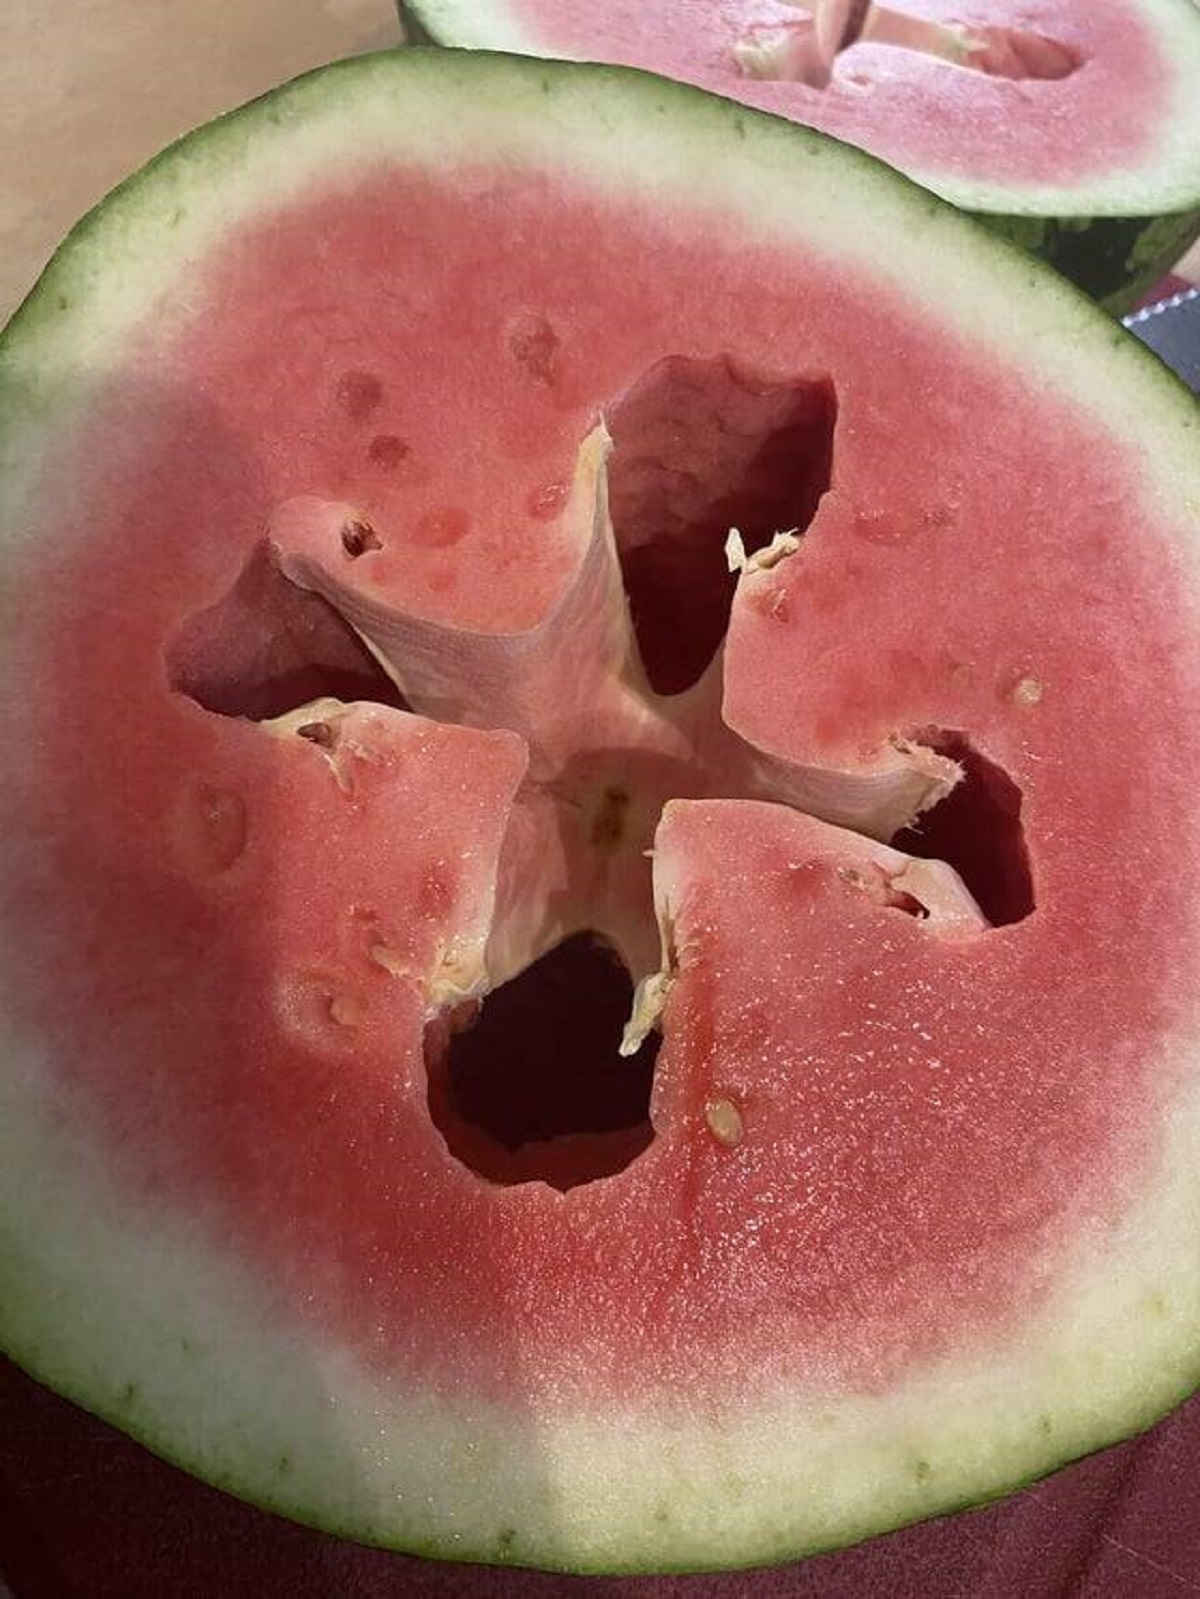 "My watermelon was hollow"